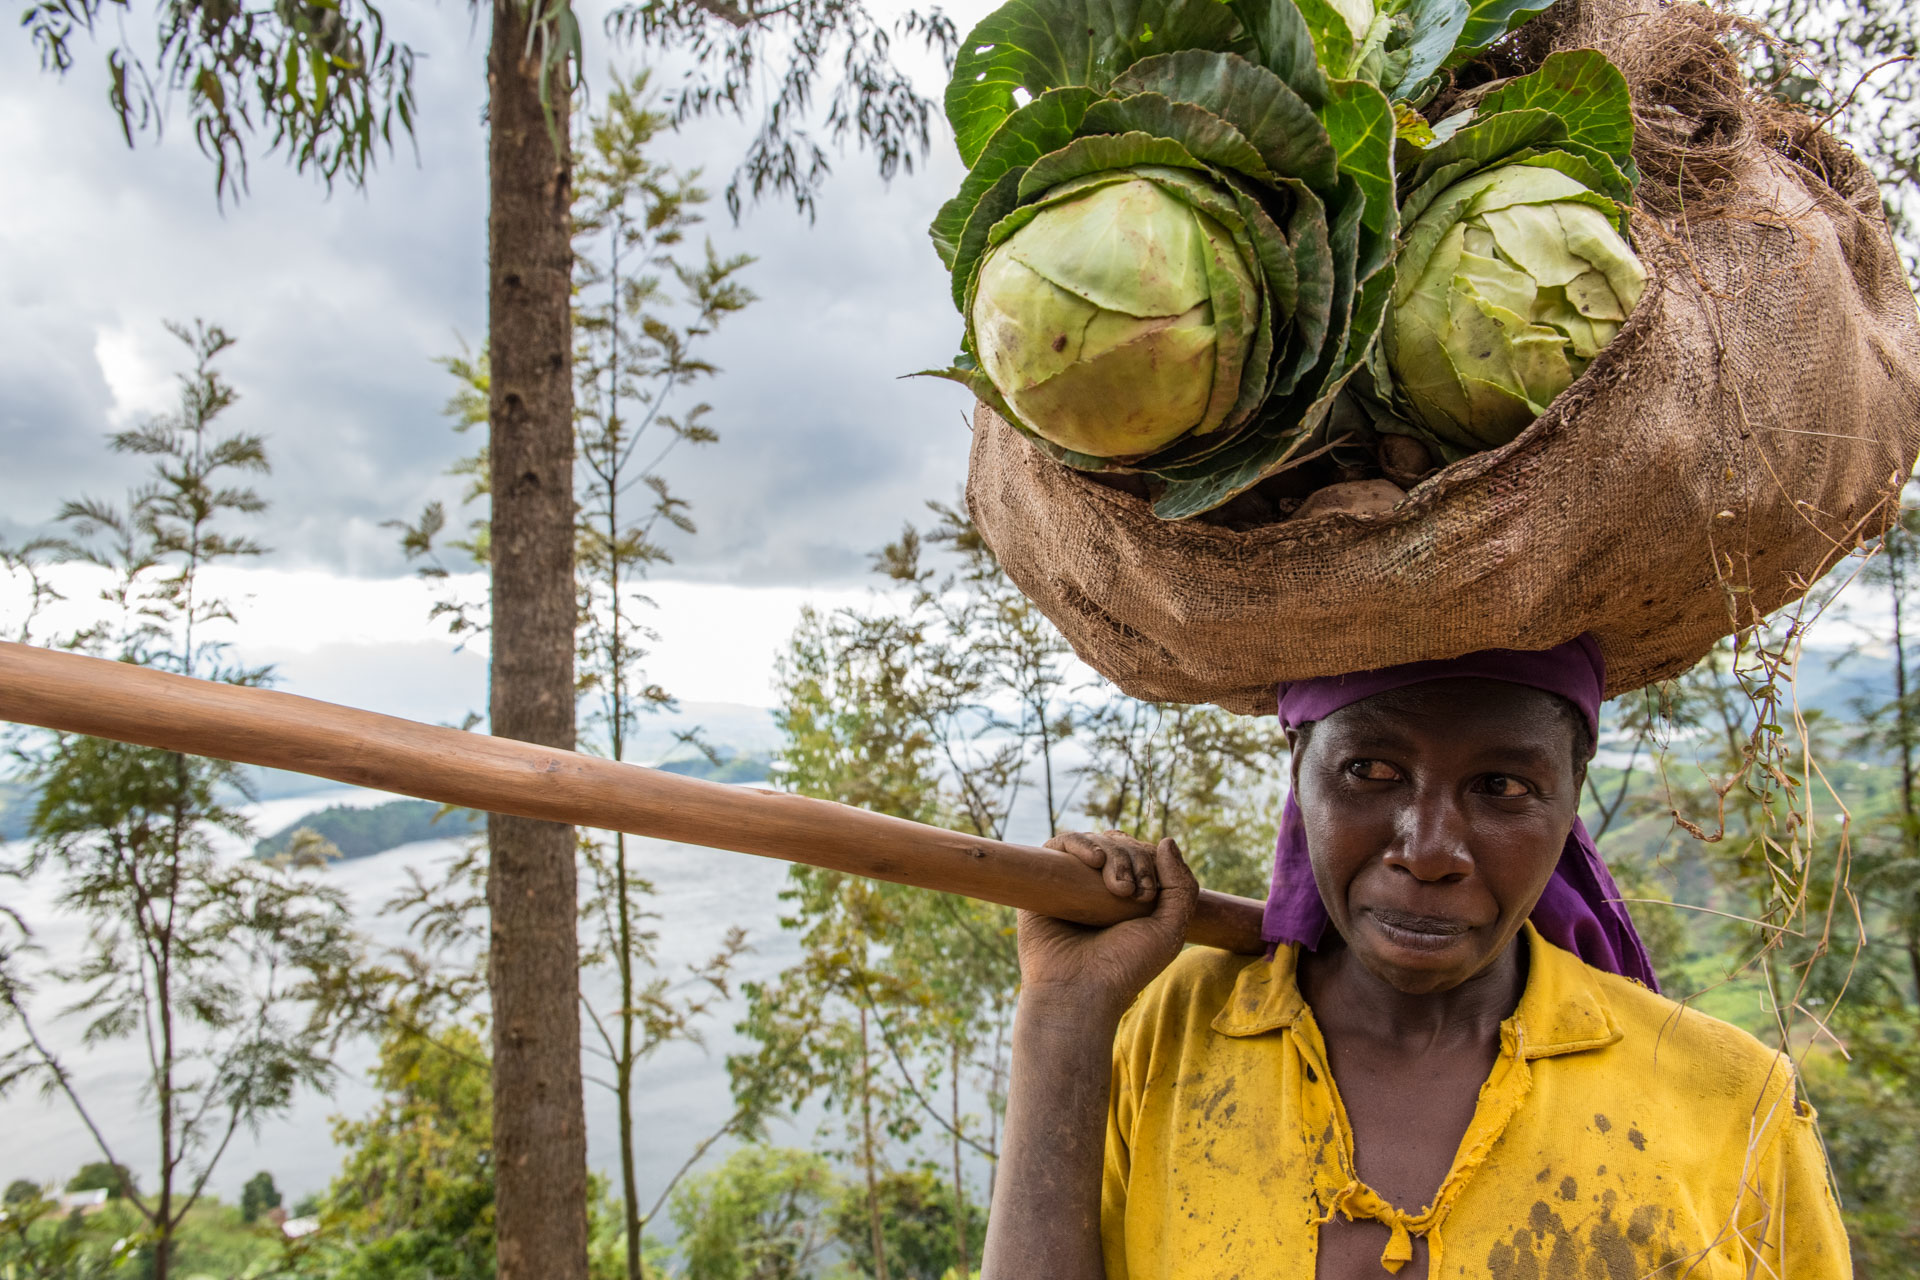 Local community member near Burera District, Cyanika Sector, with vegetables. Rwanda, Africa.